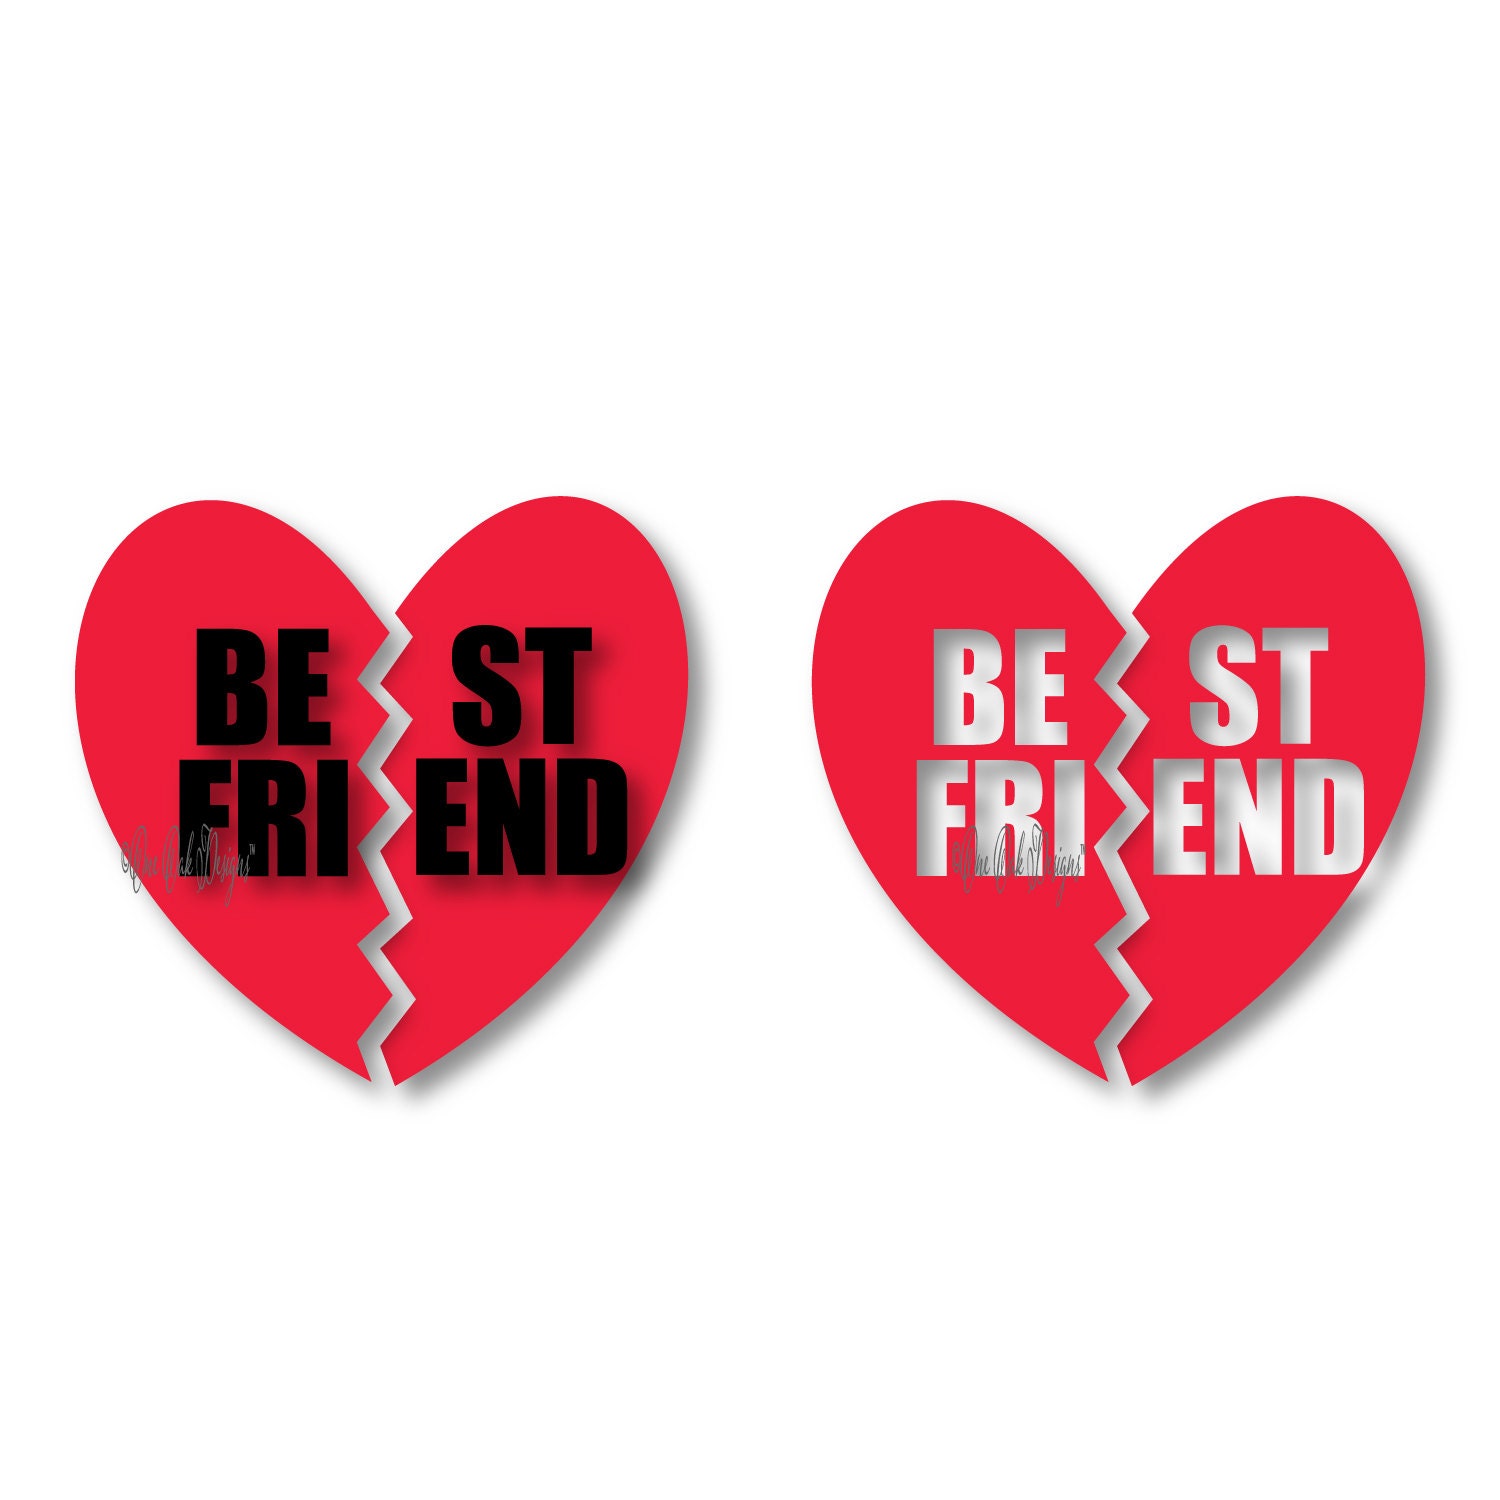 Download Best Friend Split Heart File DXF PDF ai eps png jpg svg